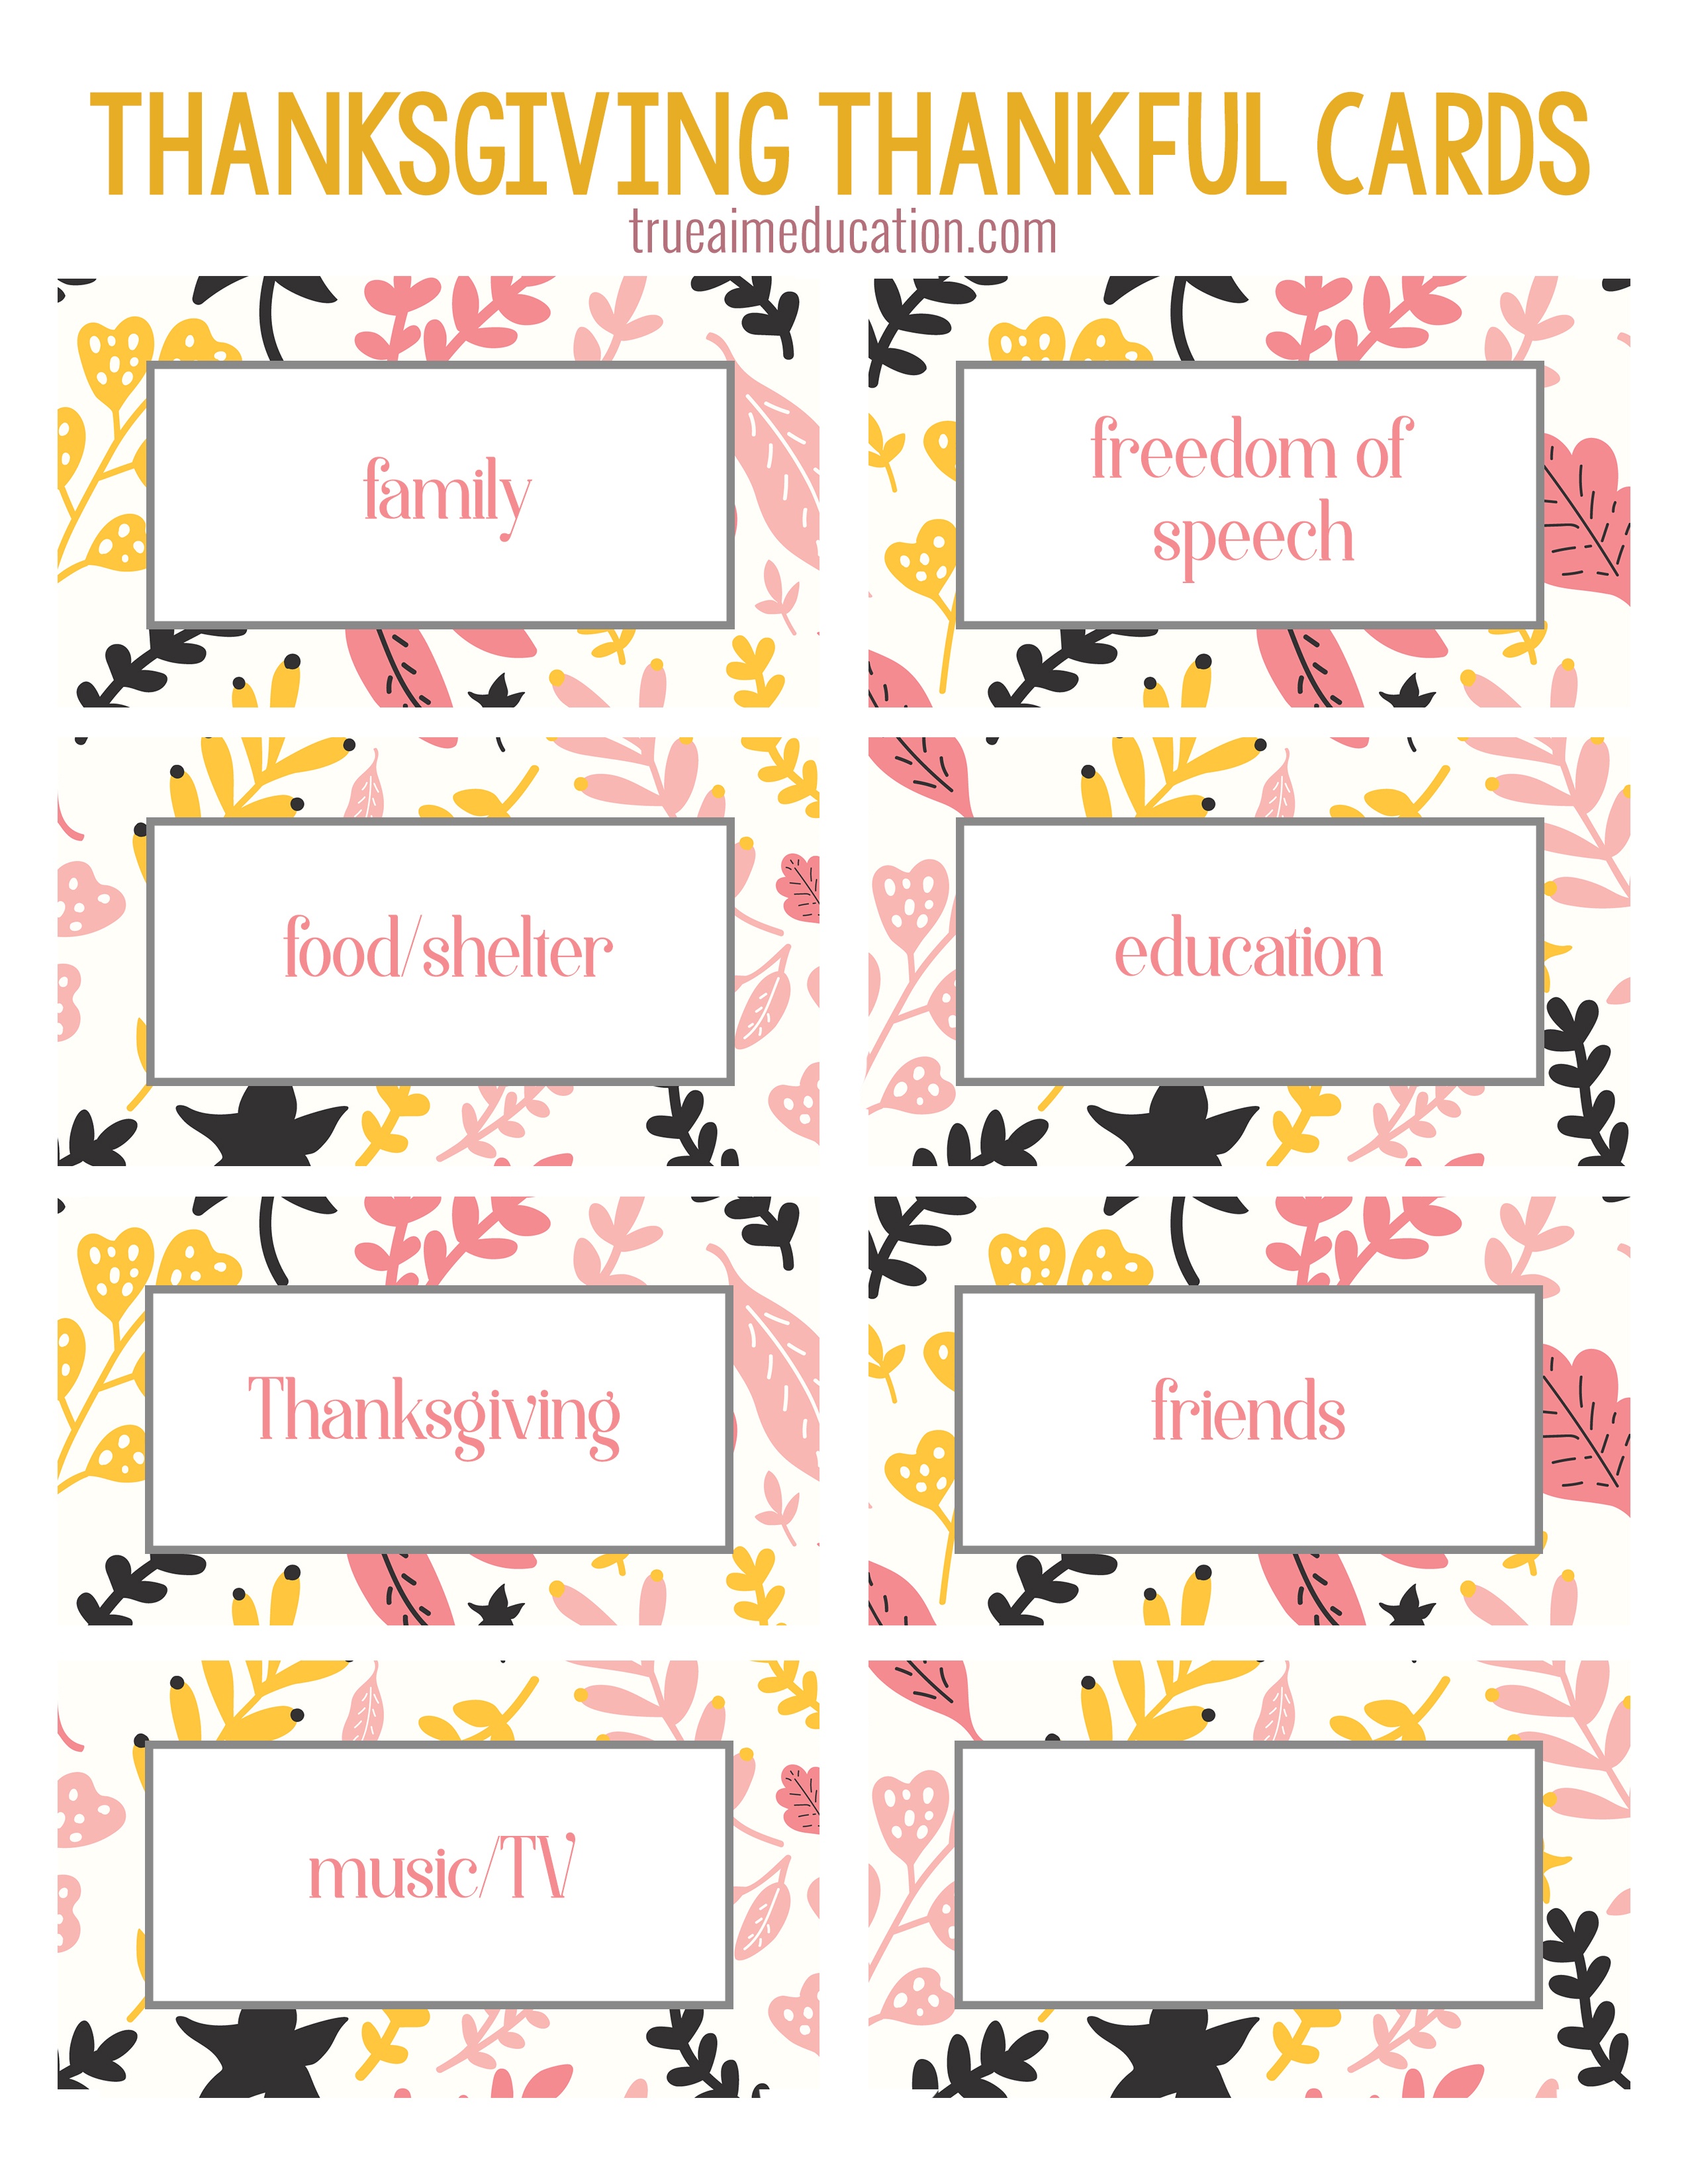 Thanksgiving Thankfulness With Free Printable Cards - Free Printable Cards